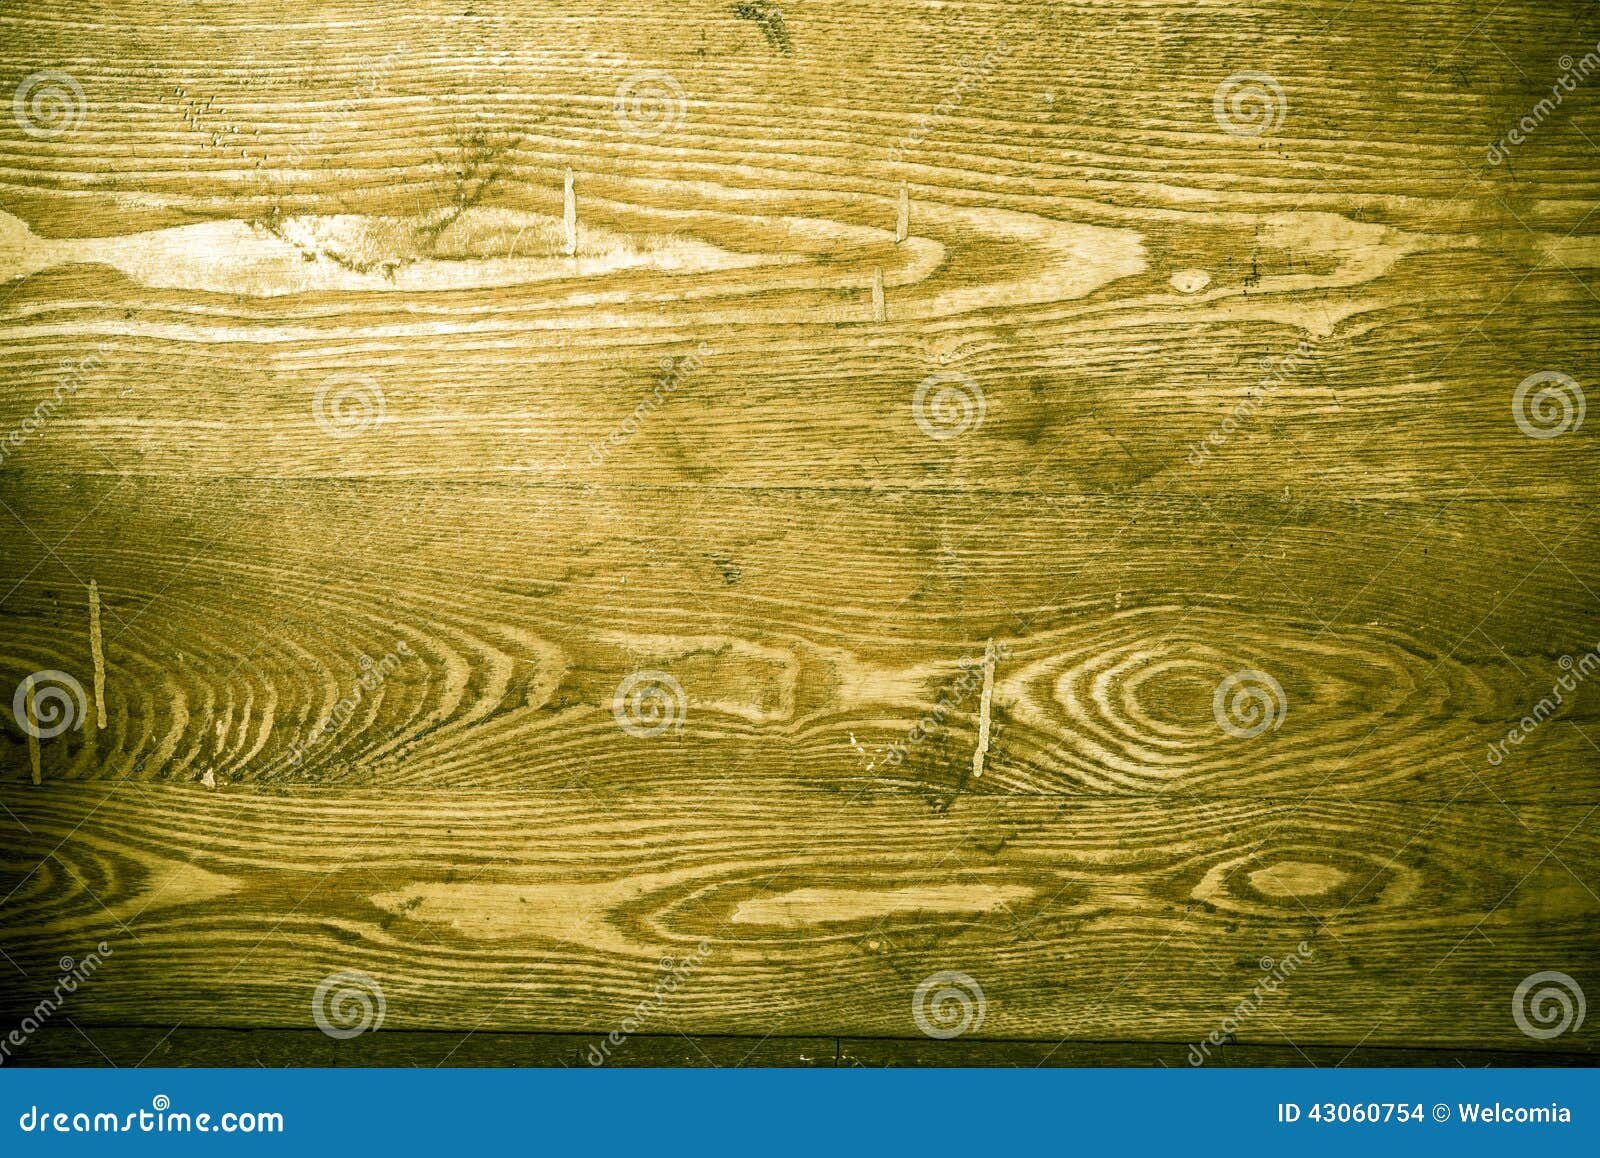 greenish wood plank